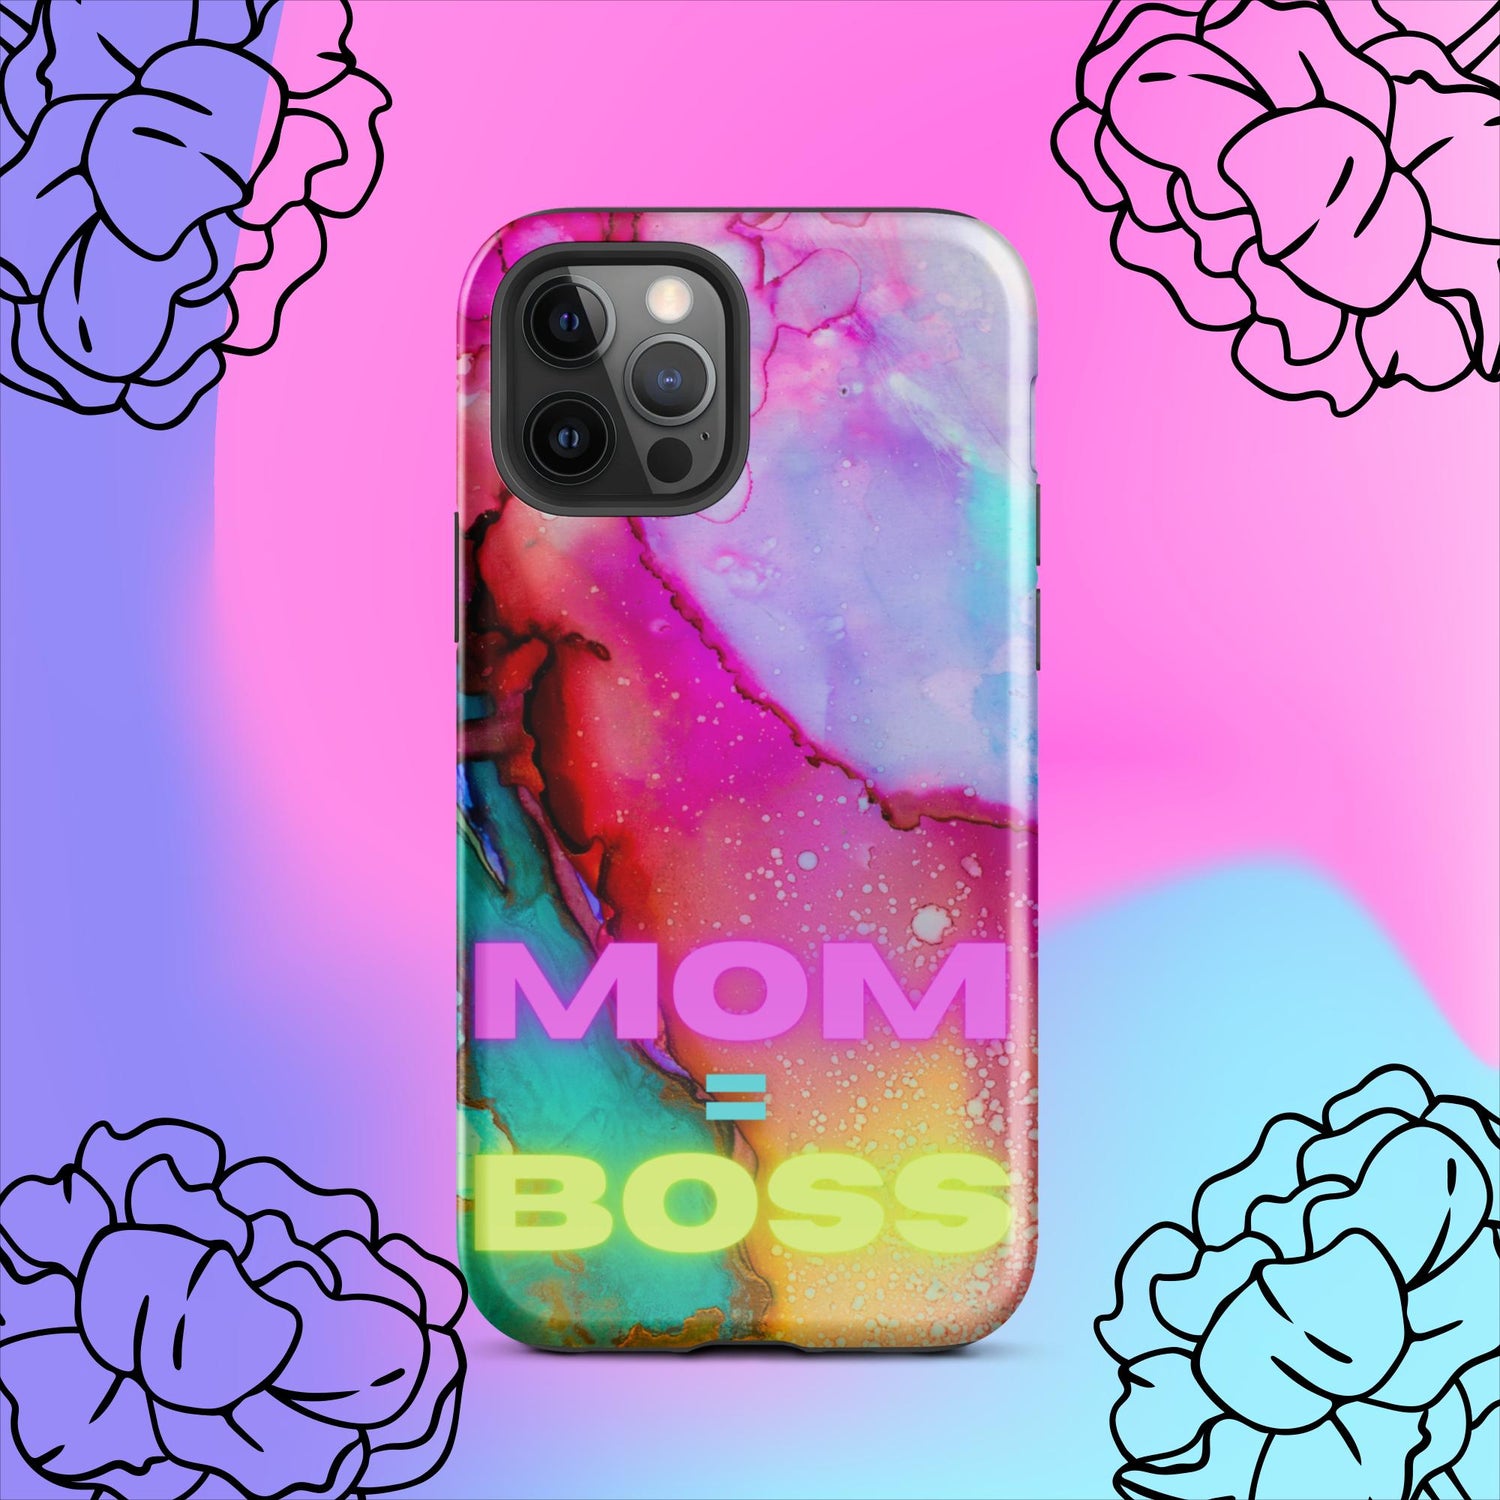 MOM = BOSS - Iphone Case